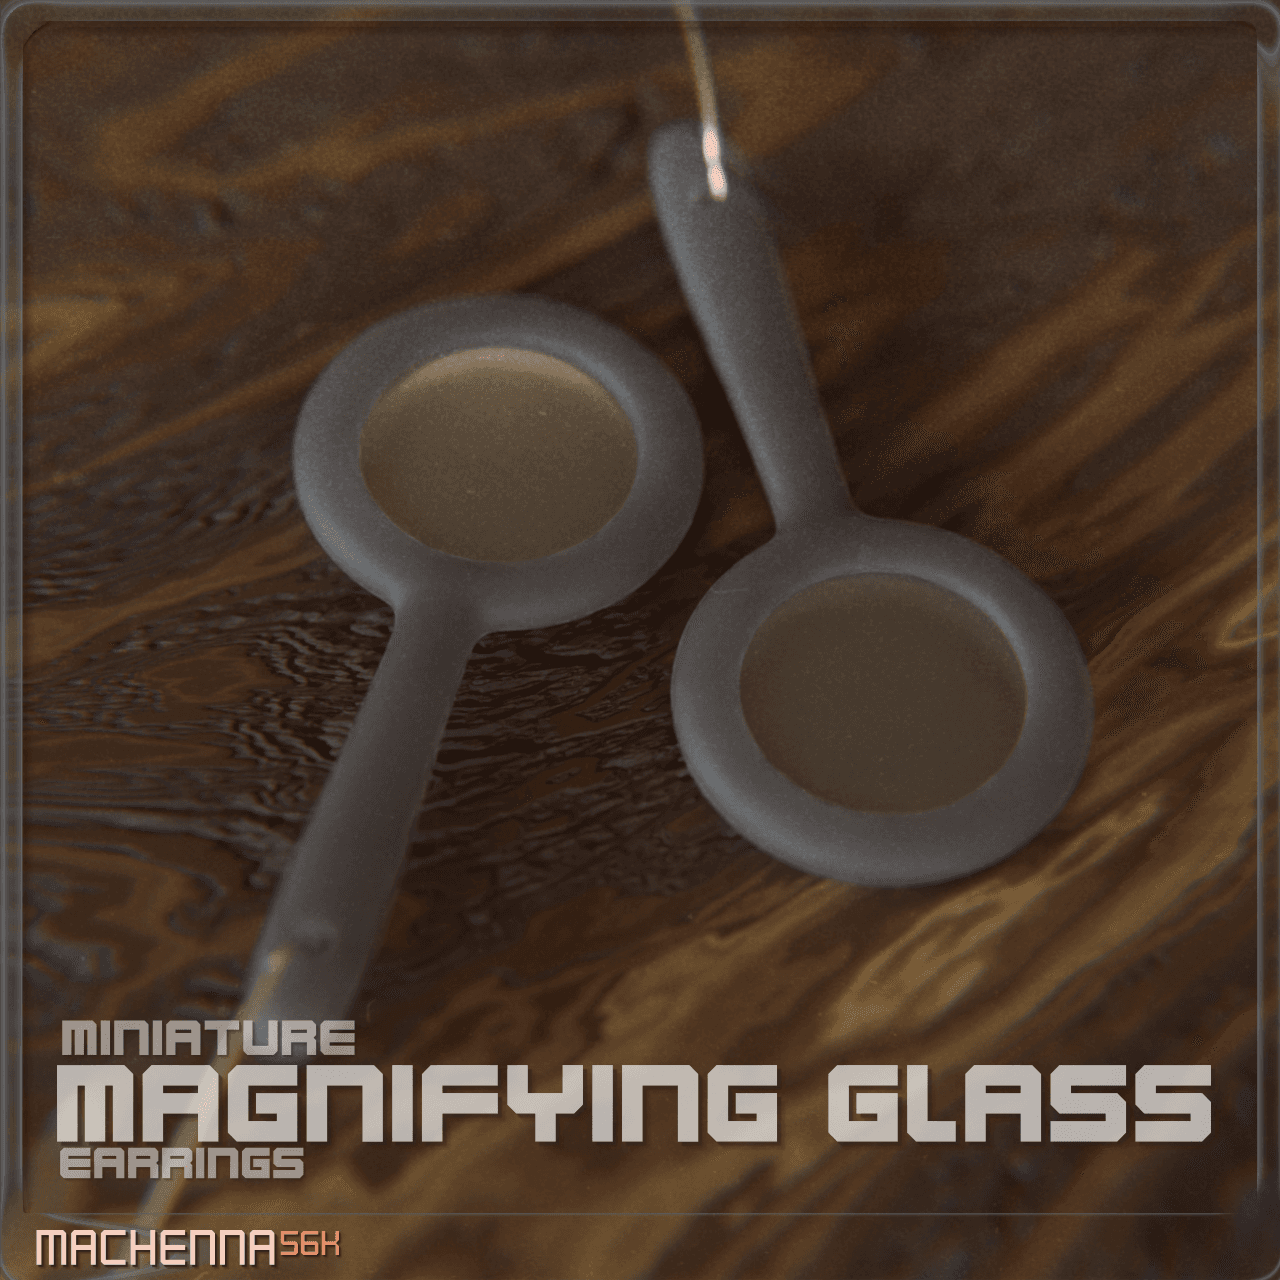 Miniature Magnifying Glass Earrings 3d model